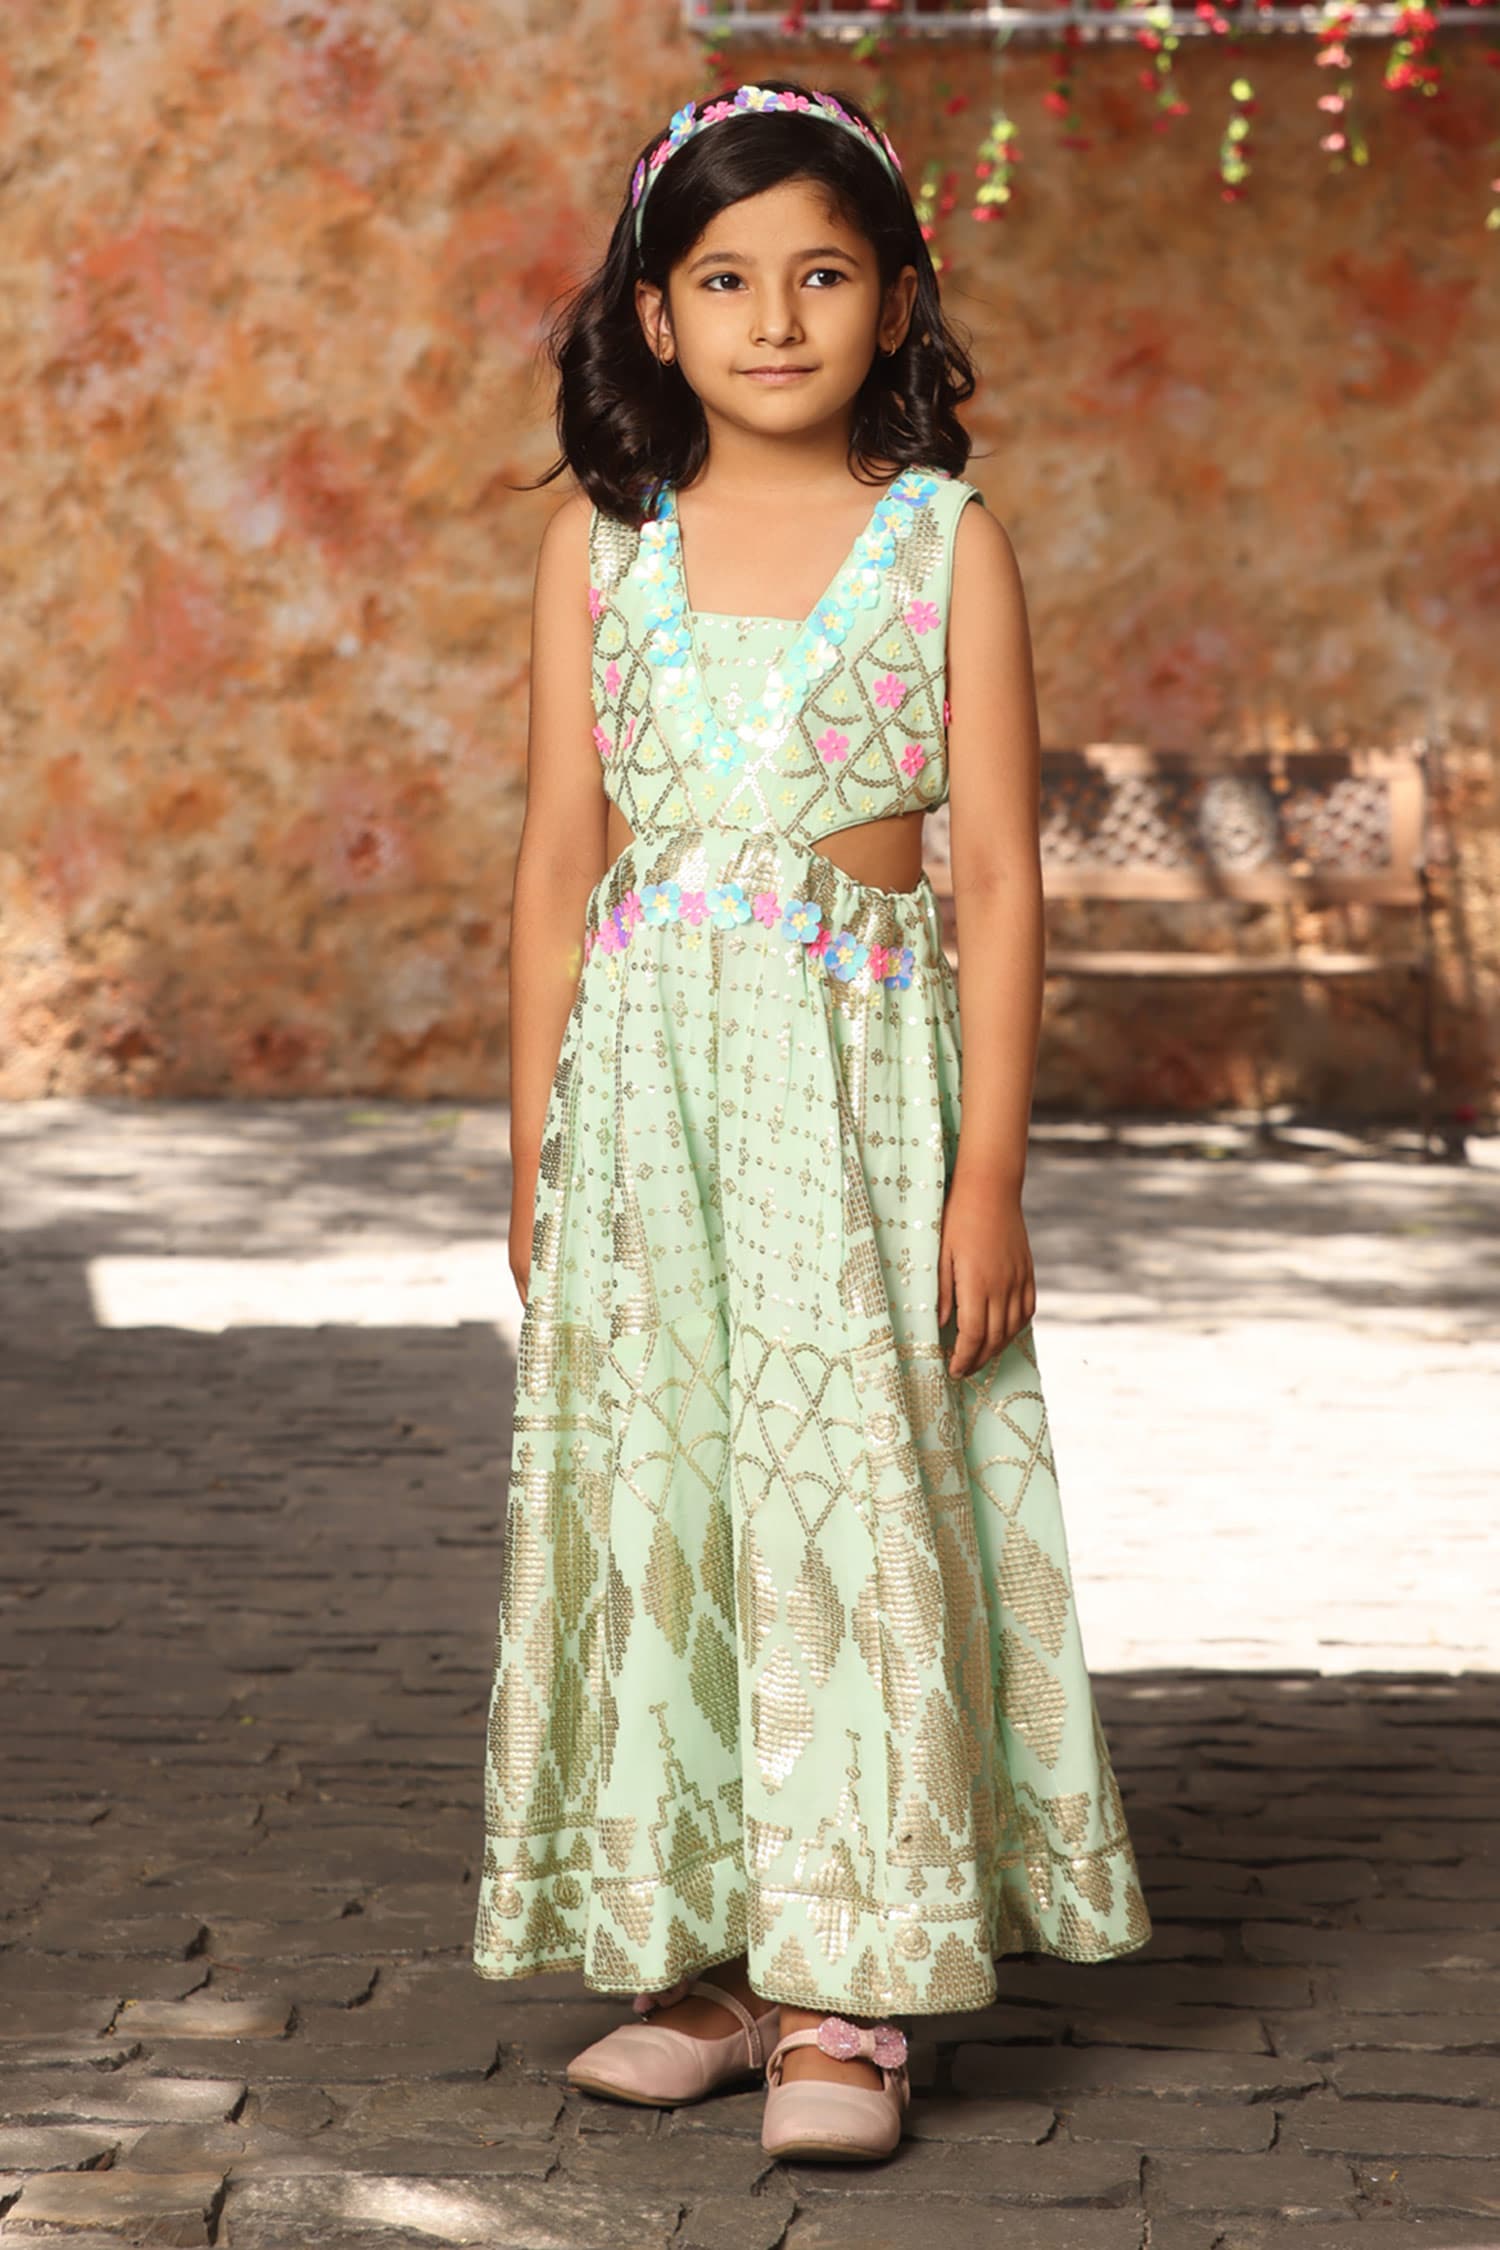 Kids Girl Wear Salwar Suit Lehenga Choli For Girls By Shri Balaji Emporium  Wholesale at Rs 2199/piece | Kids Salwar Kameez in Surat | ID: 2849748576988